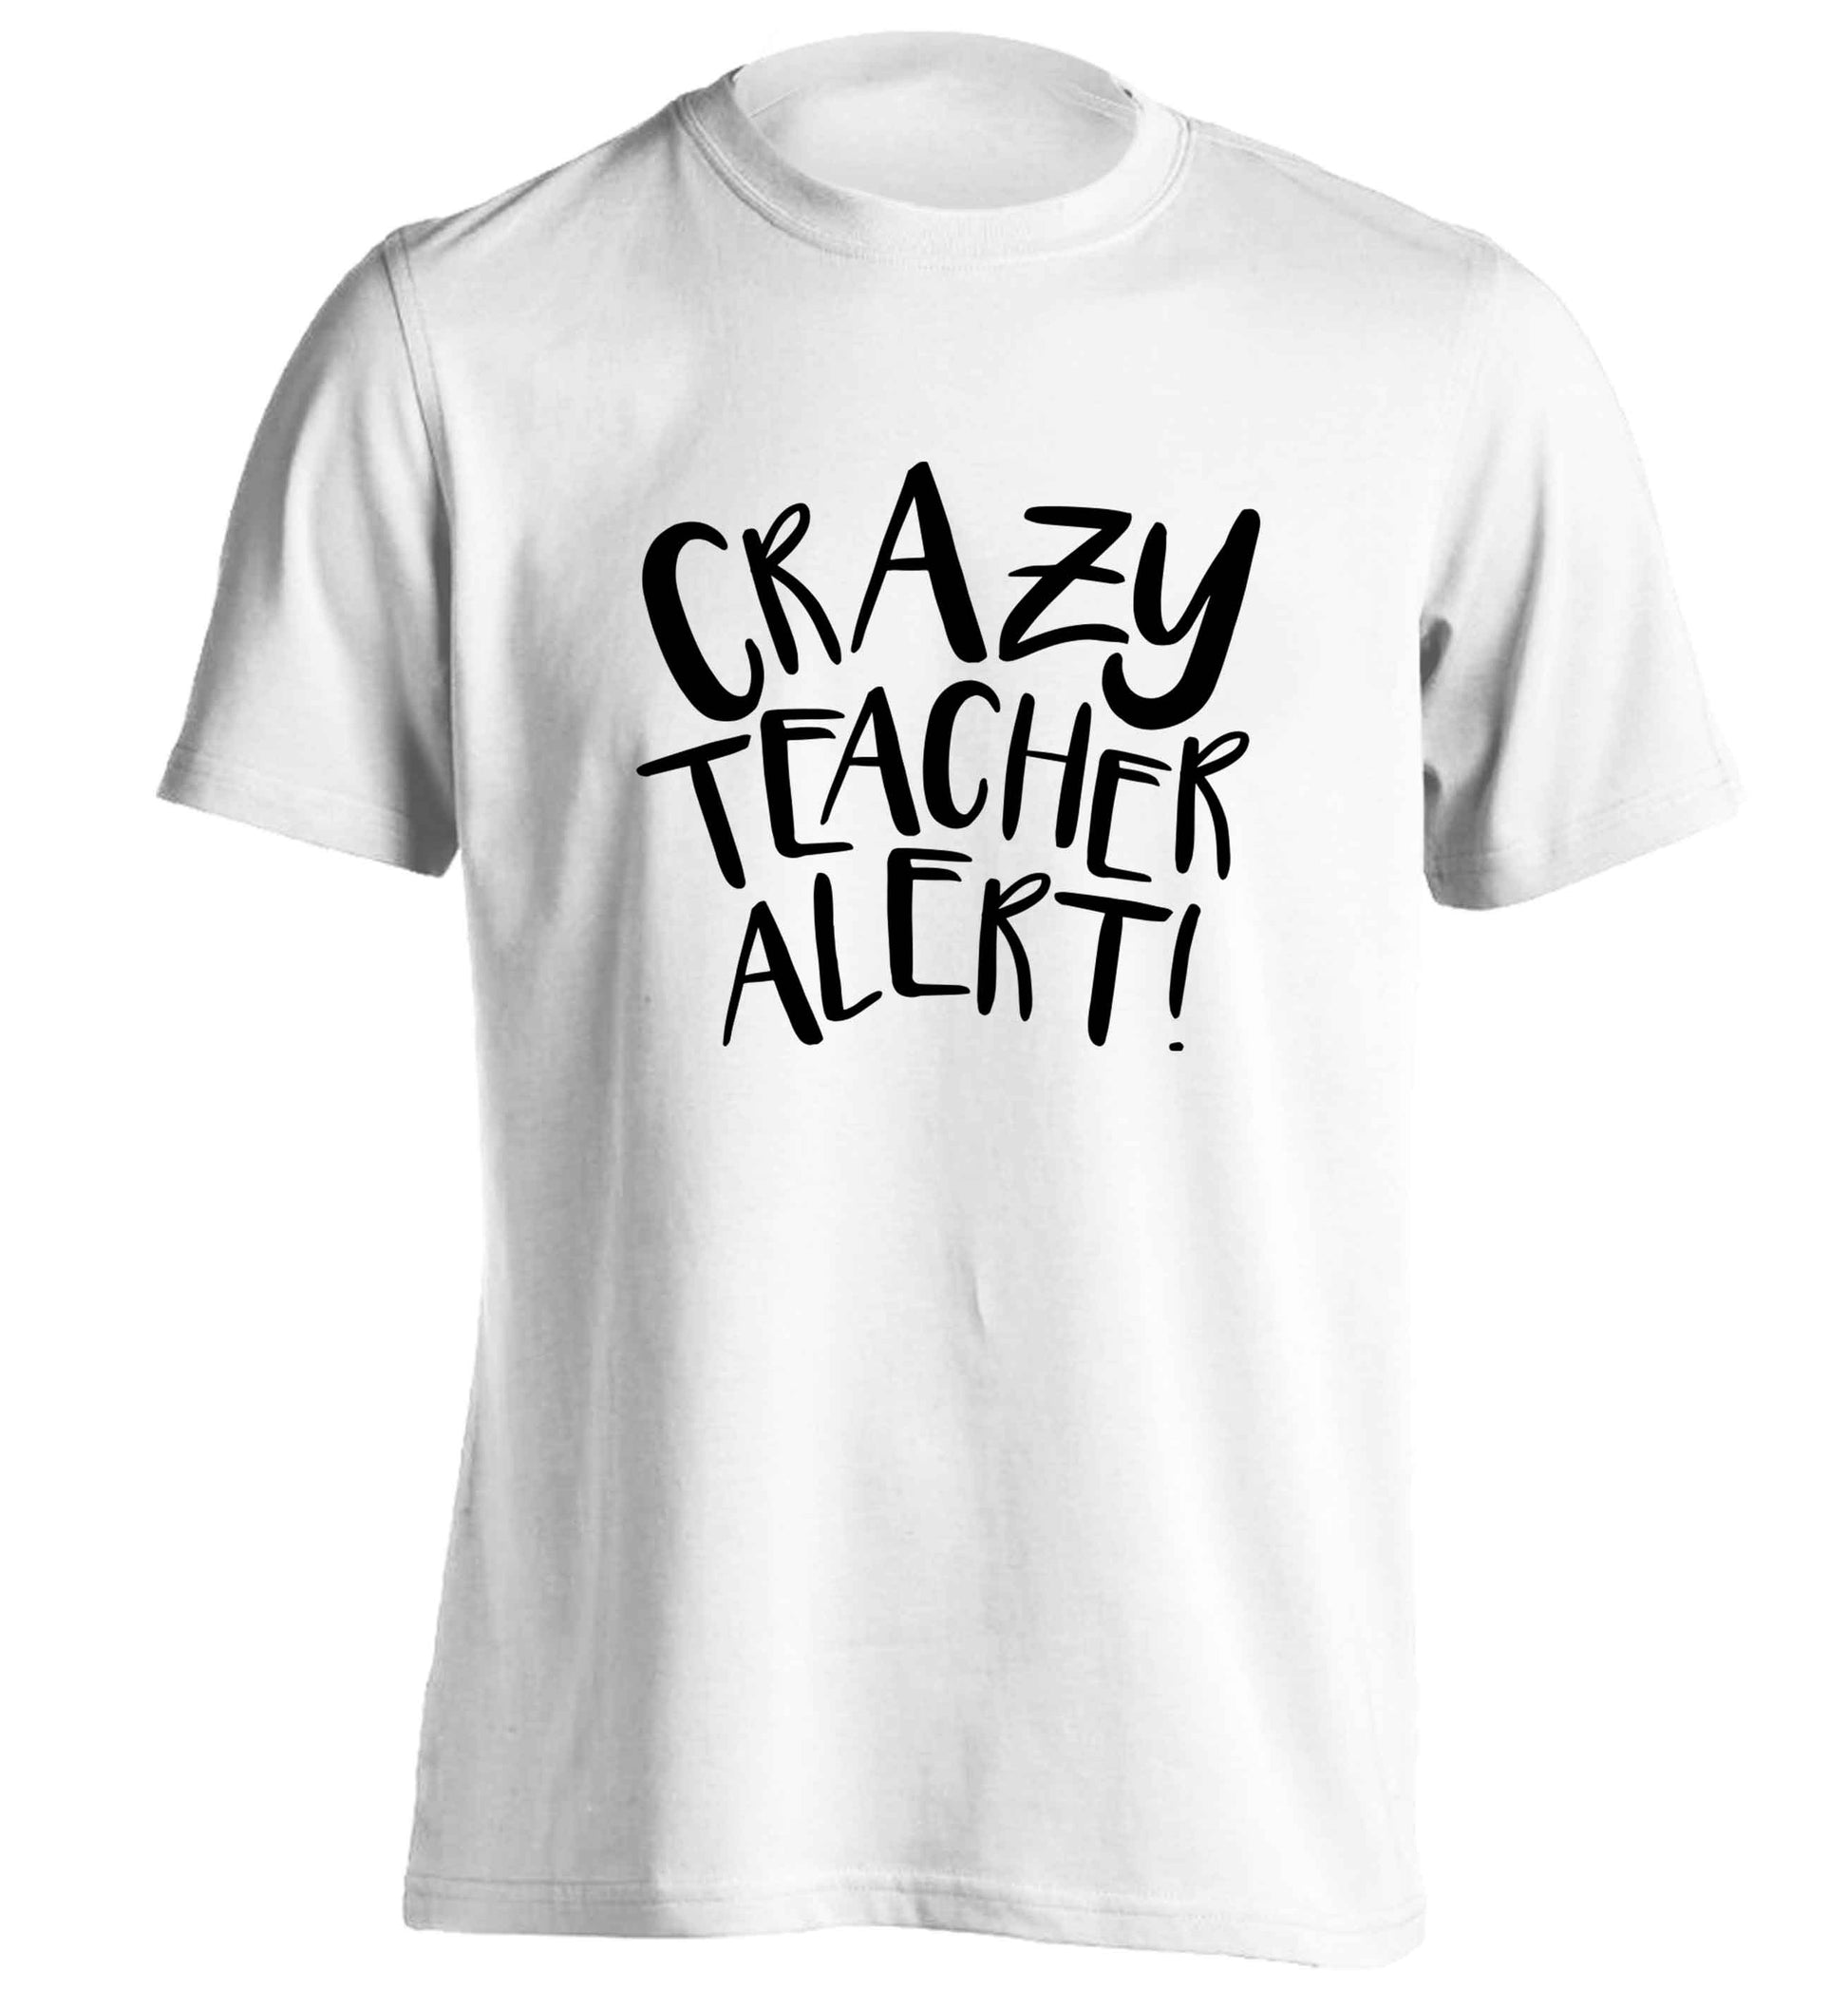 Crazy teacher alert adults unisex white Tshirt 2XL